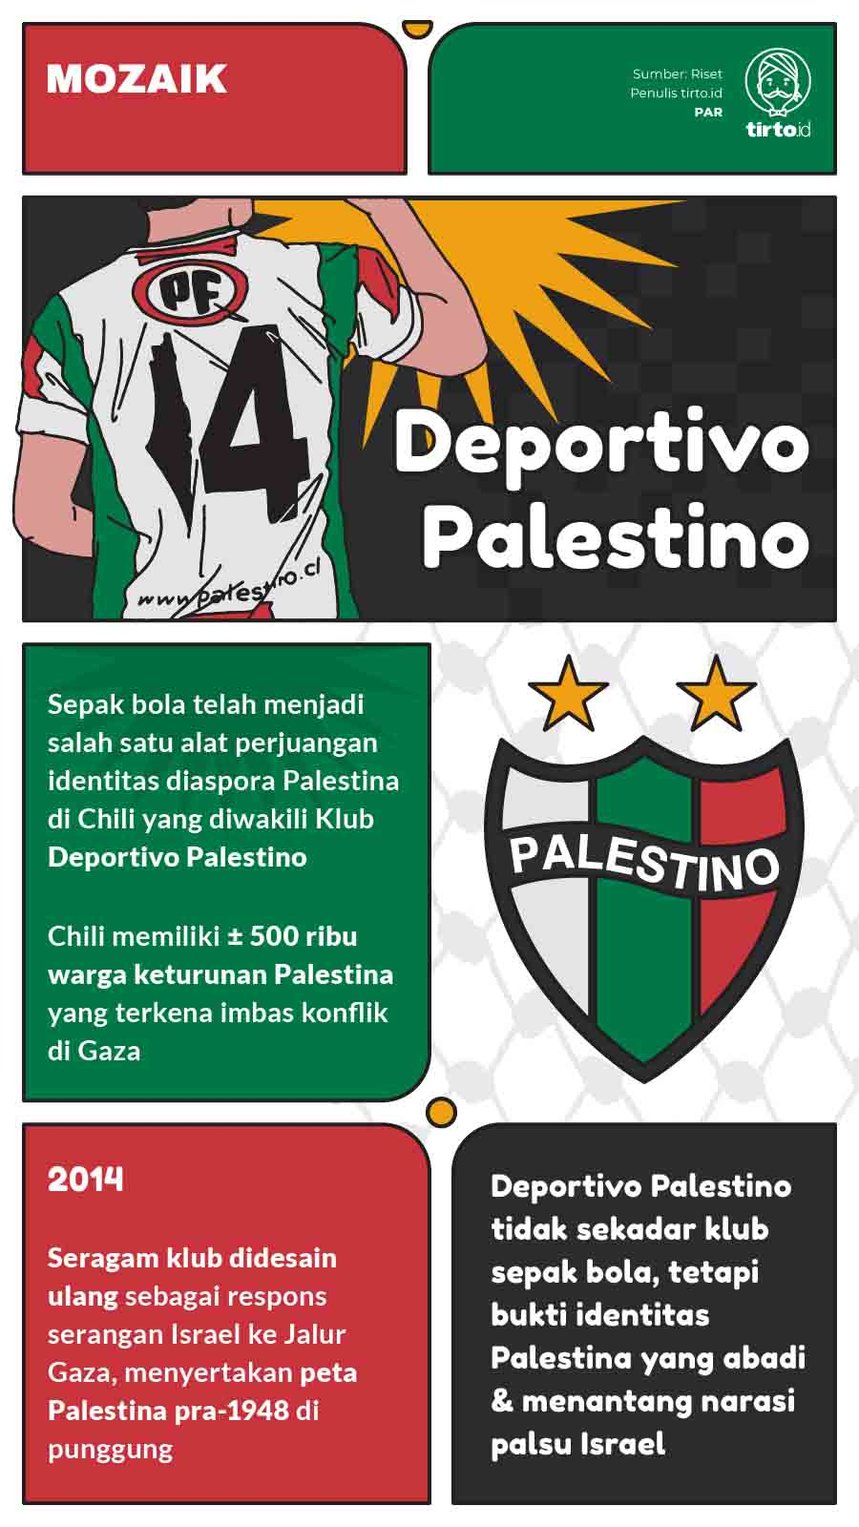 Infografik Mozaik Deportivo Palestino